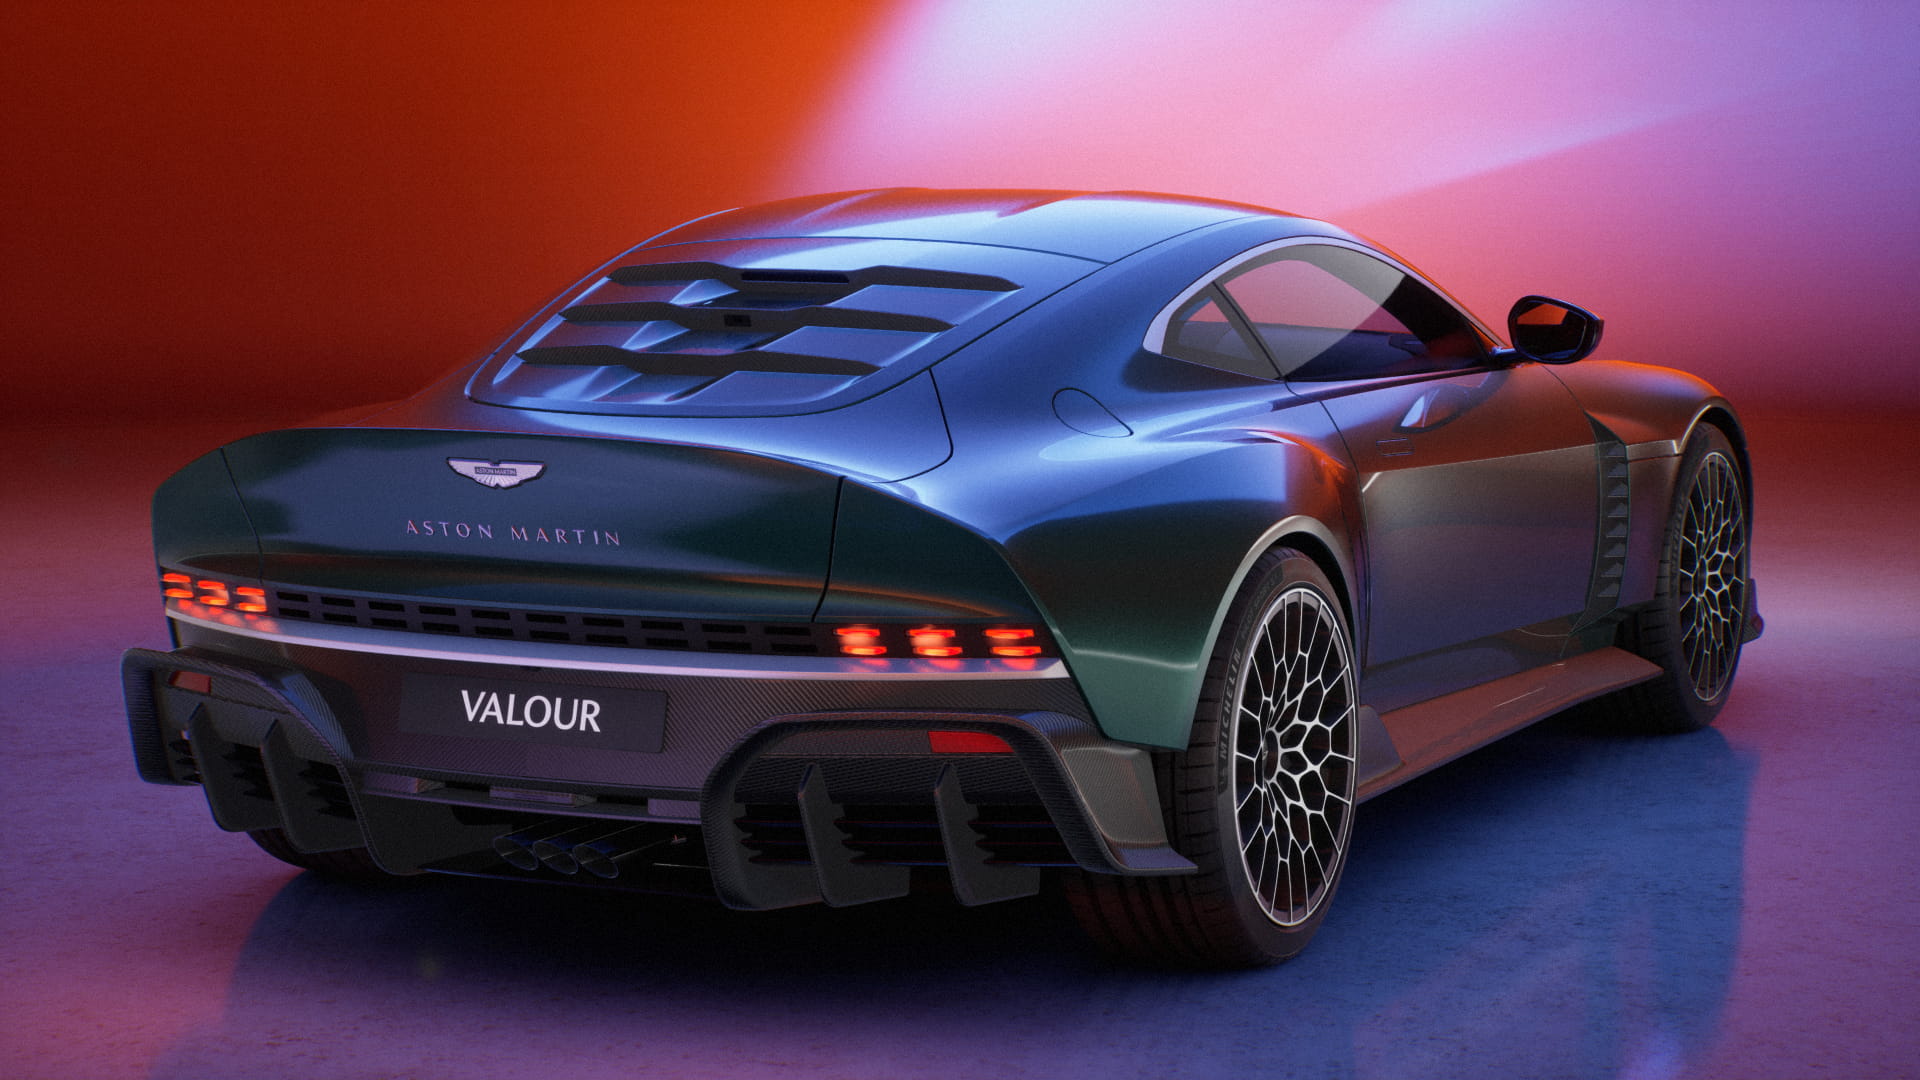 Valour | Retro-Inspired Limited Edition Manual Car | Aston Martin